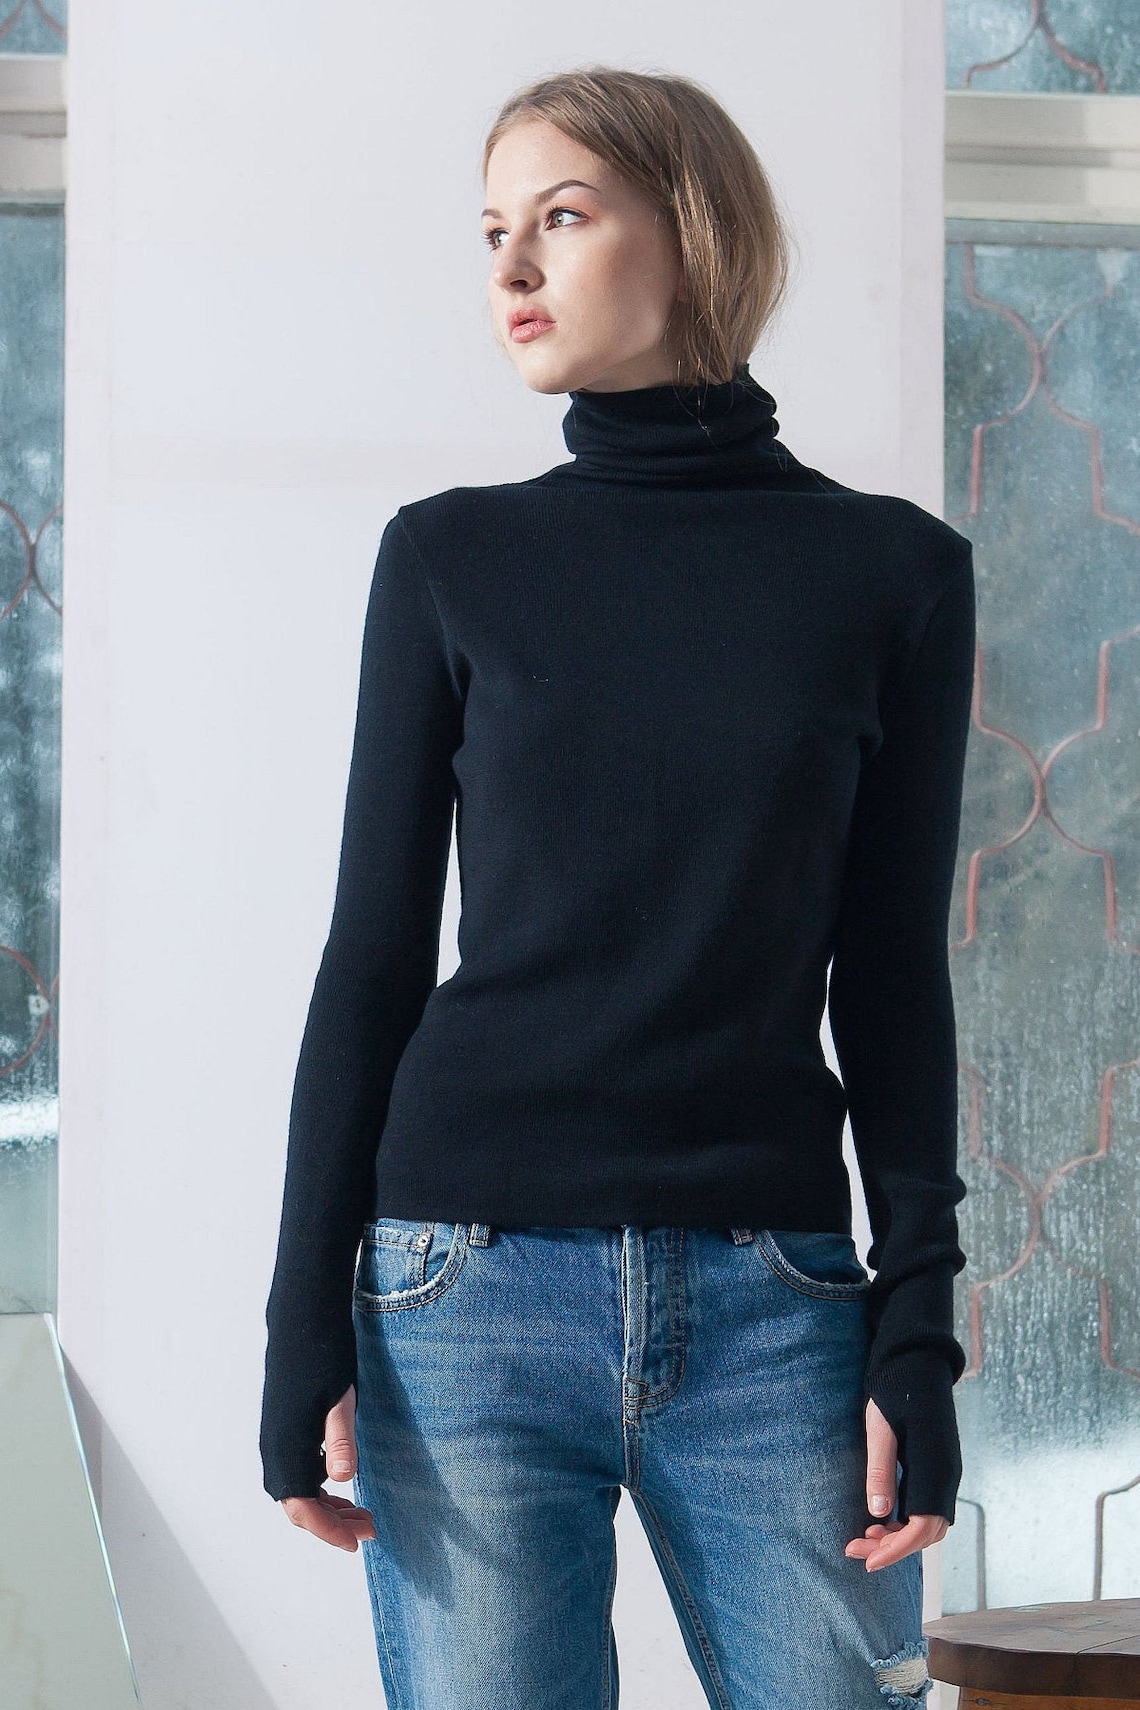 Turtleneck sweater off-white turtleneck merino wool | Etsy